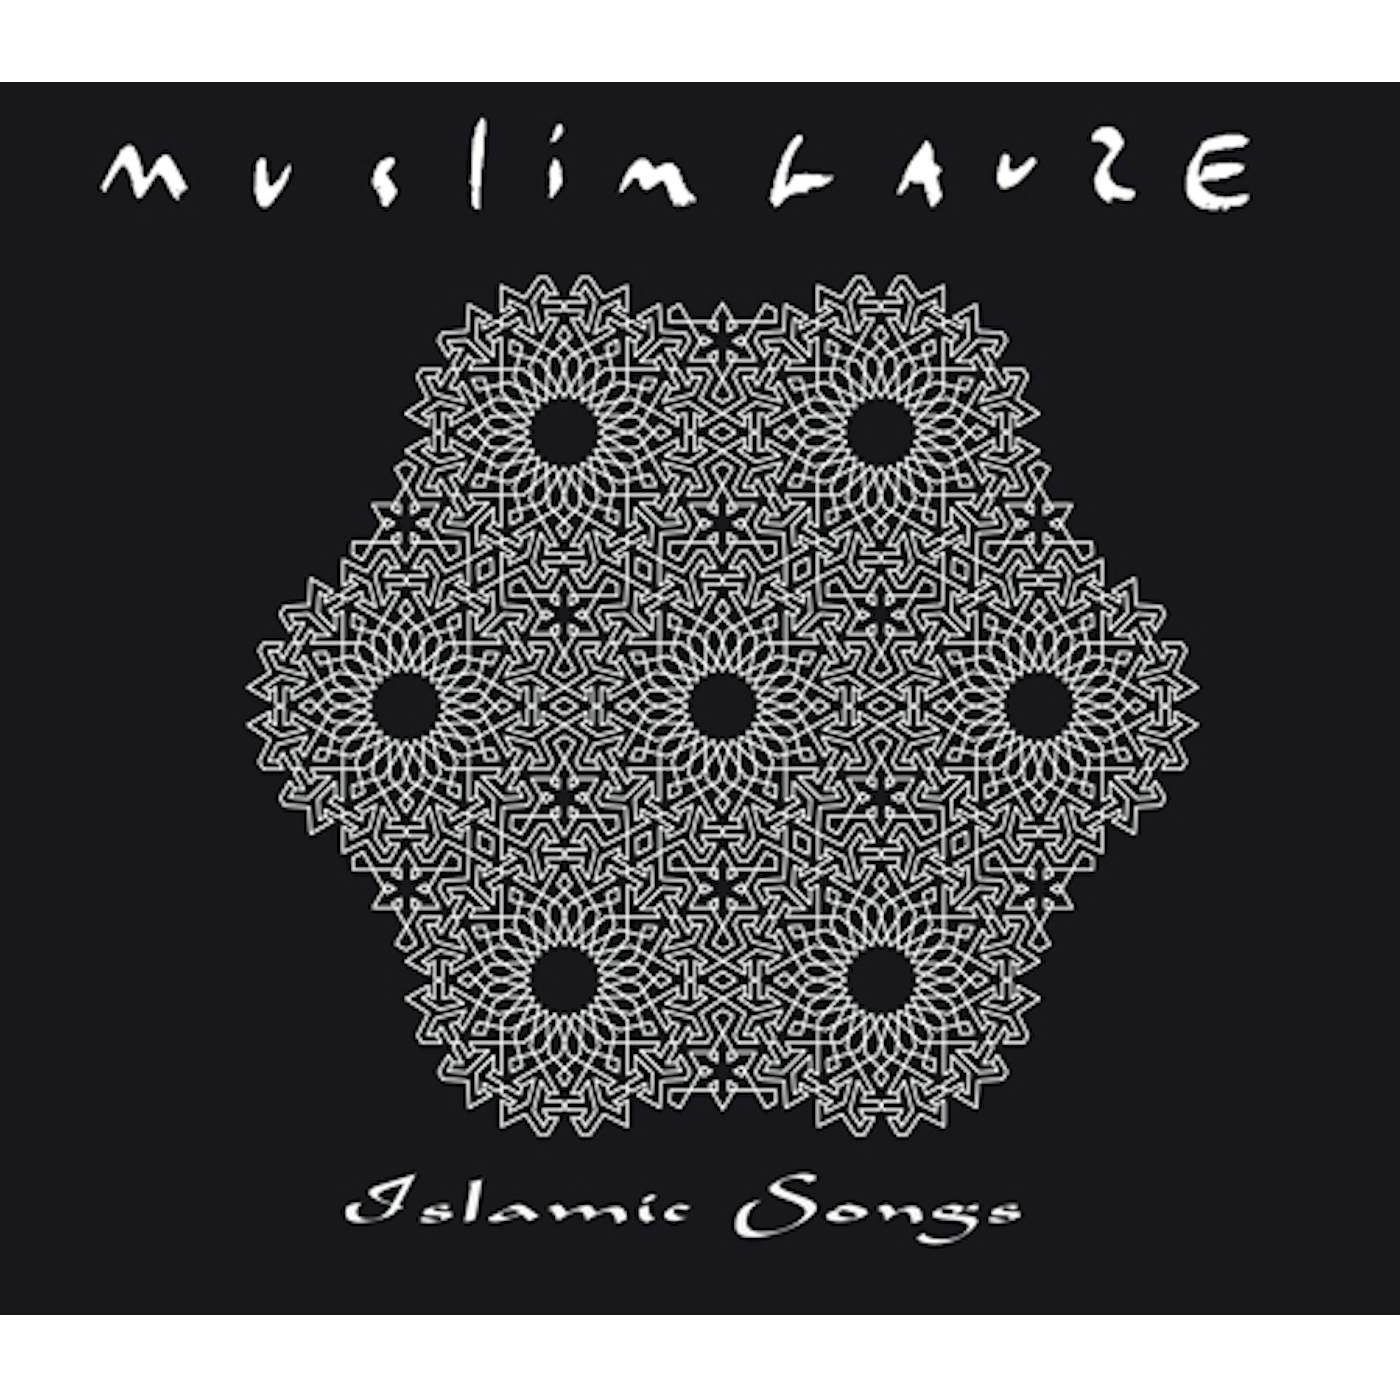 Muslimgauze ISLAMIC SONGS CD